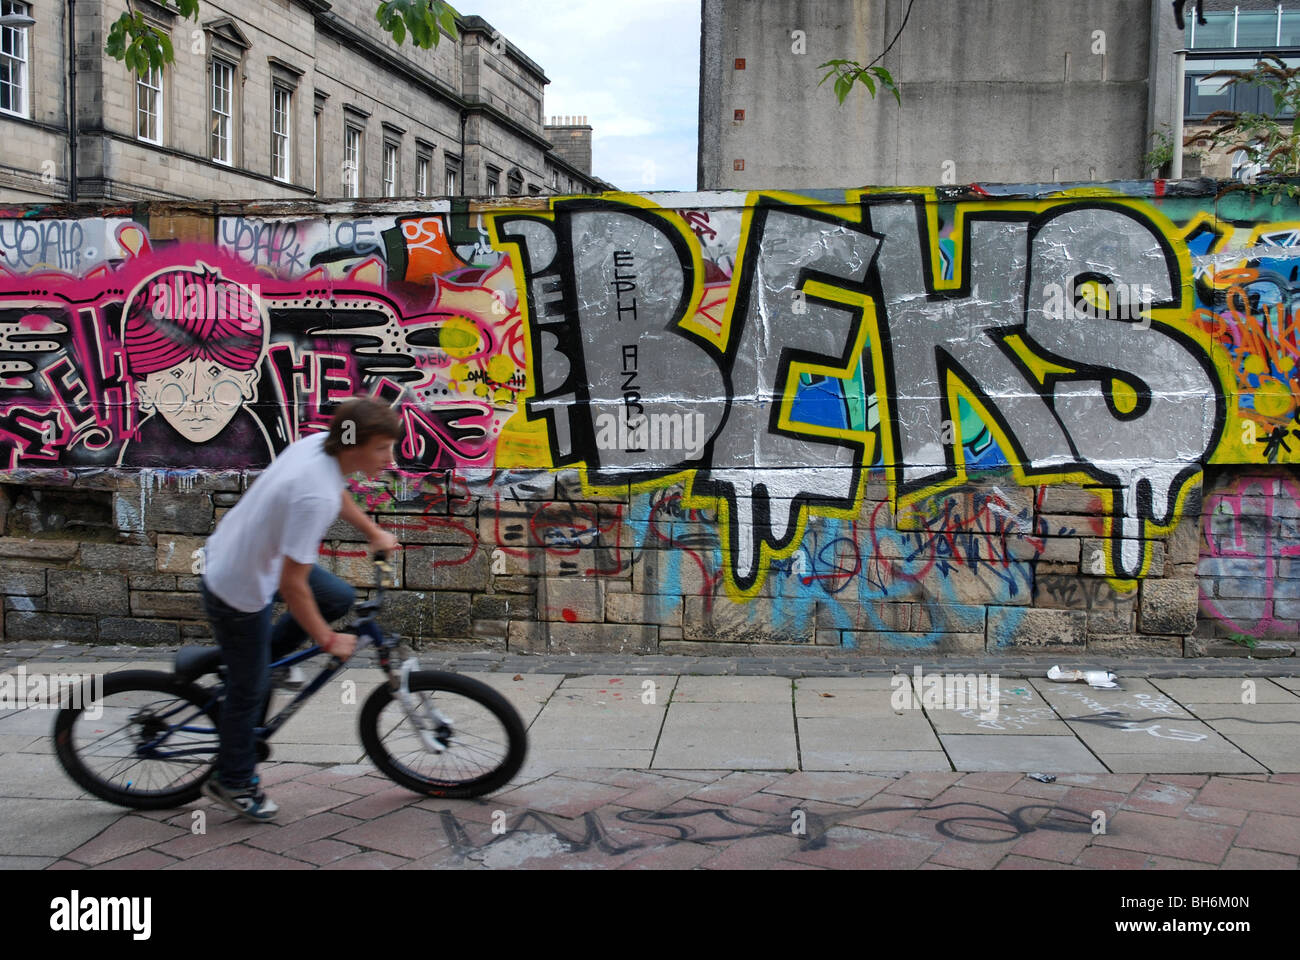 Boy on a bicycle and graffiti in Potterrow Edinburgh Stock Photo